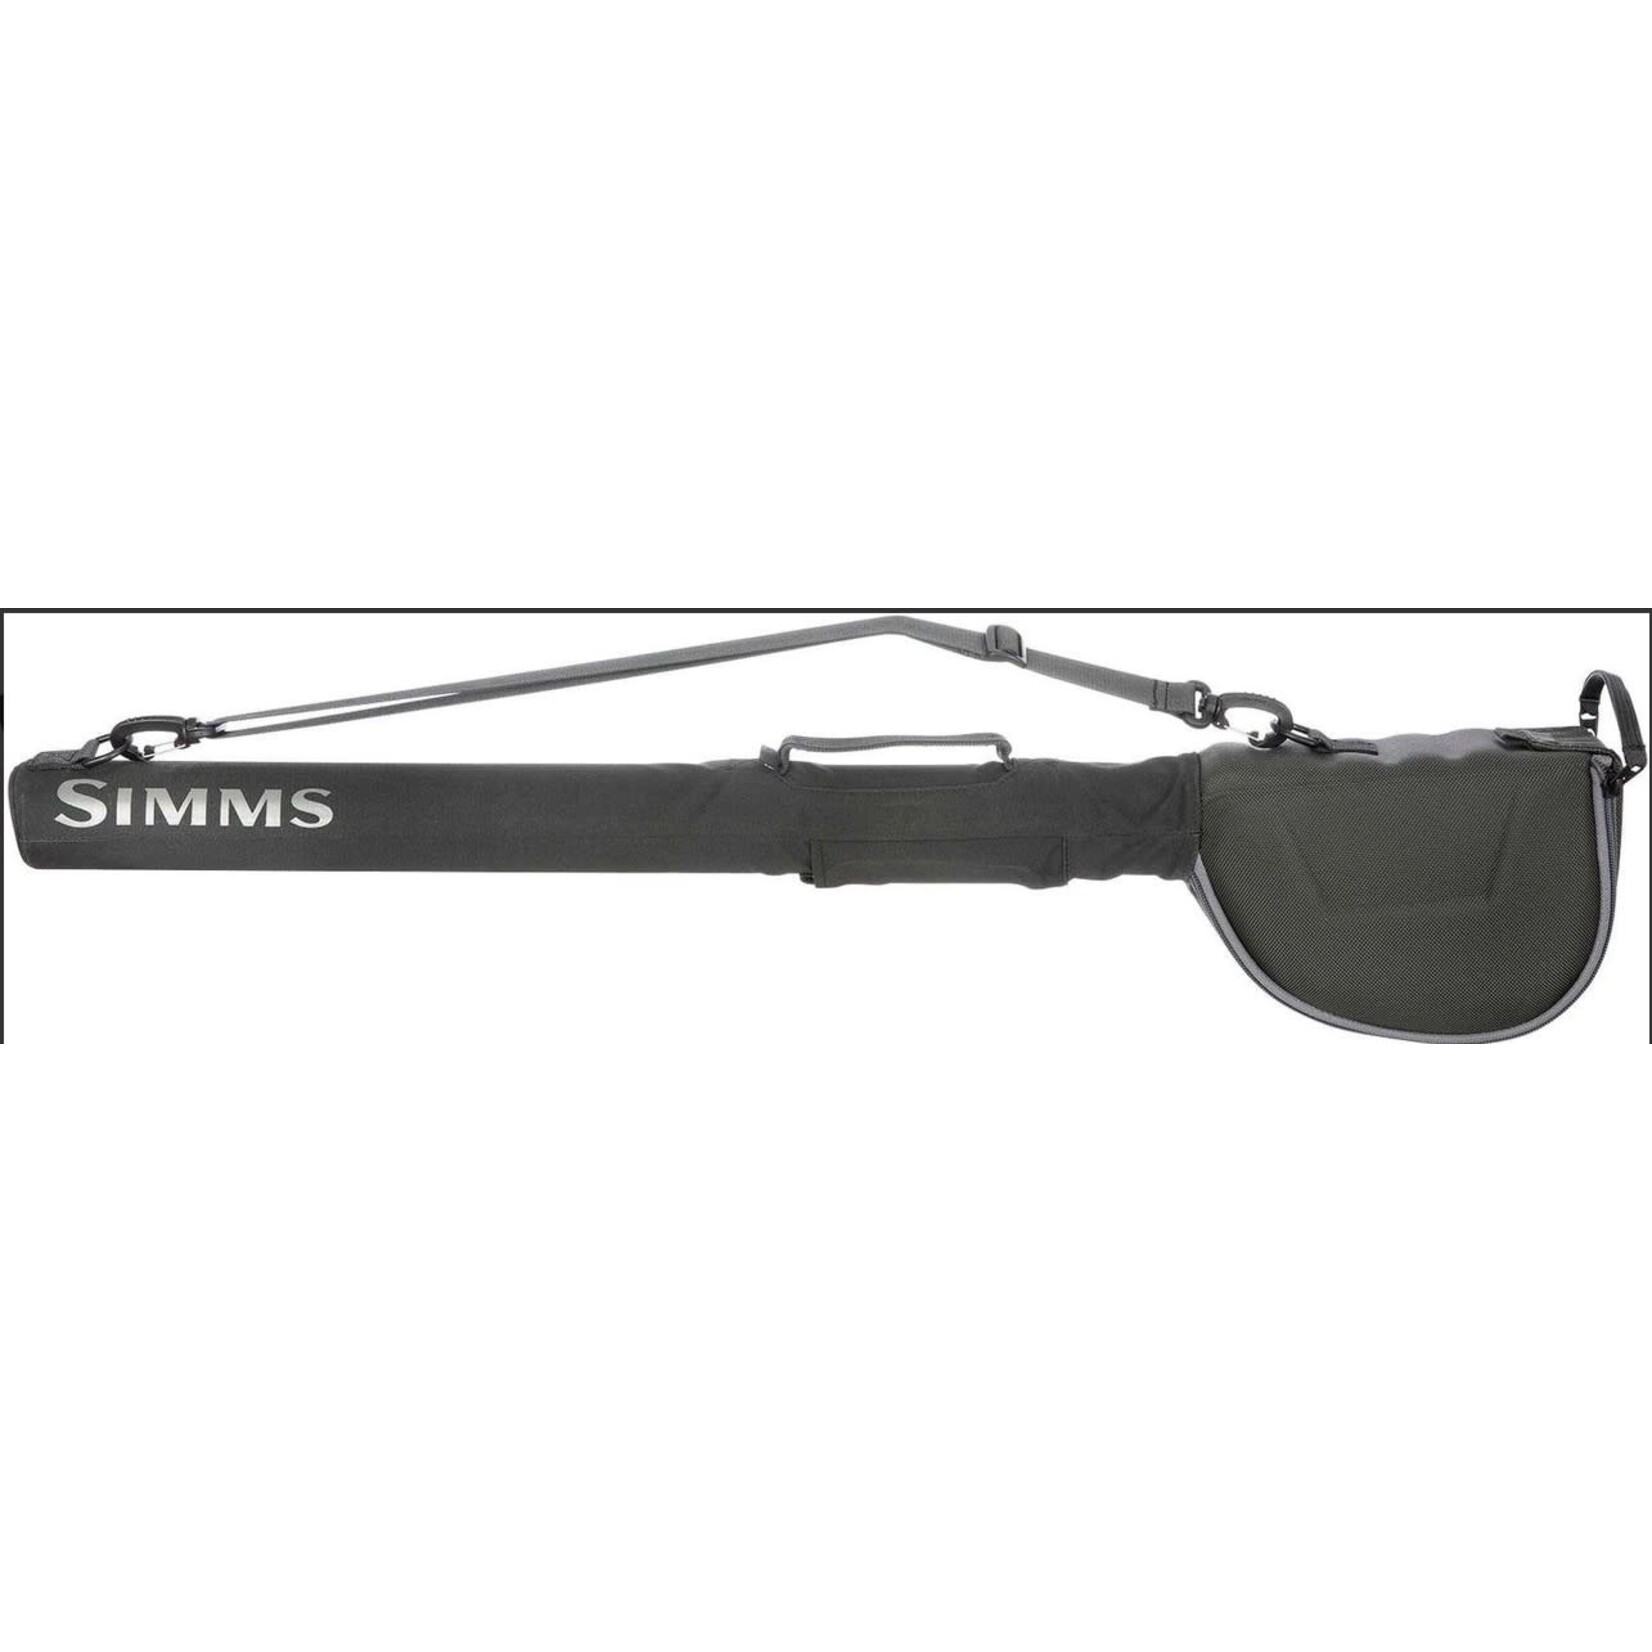 Simms Fishing Simms GTS Single Rod /Reel Vault 9'4 piece Carbon